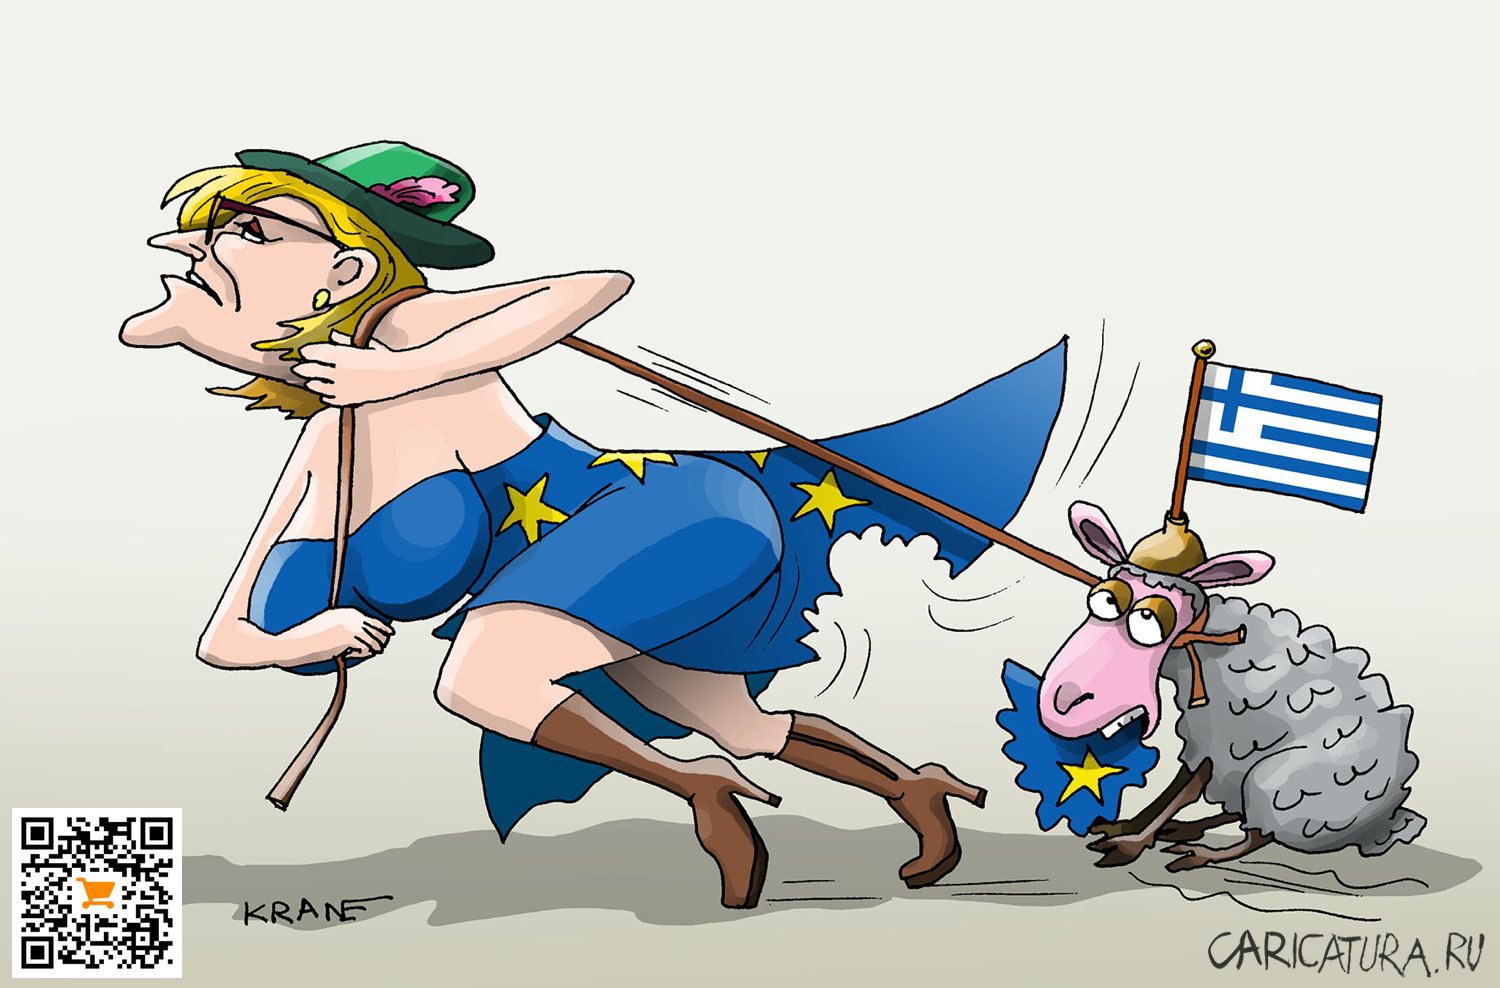 Карикатура "Паршивая овца Европу портит", Евгений Кран